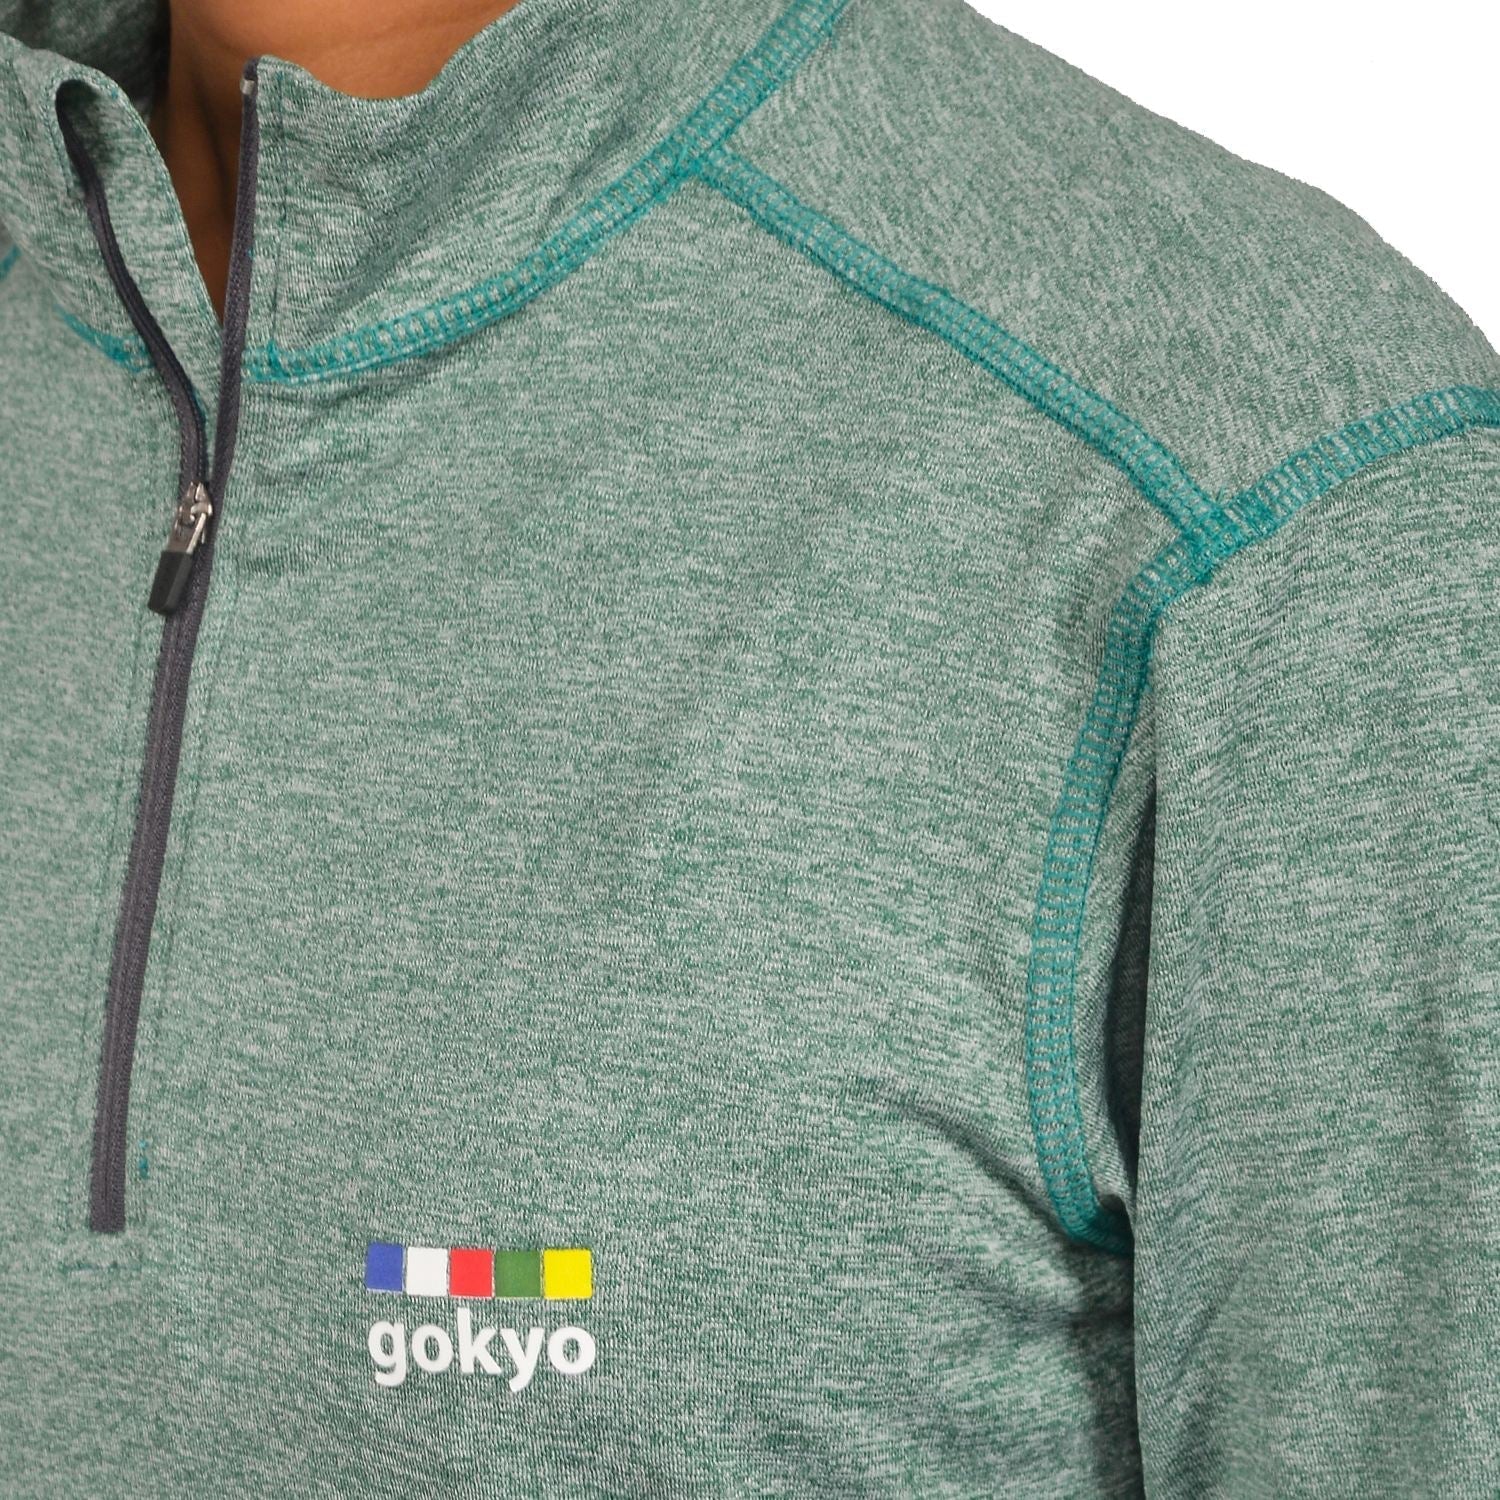 Buy Gokyo Kaza All Season Outdoor & Trekking Tshirt - Women | Trekking & Hiking T-shirts at Gokyo Outdoor Clothing & Gear